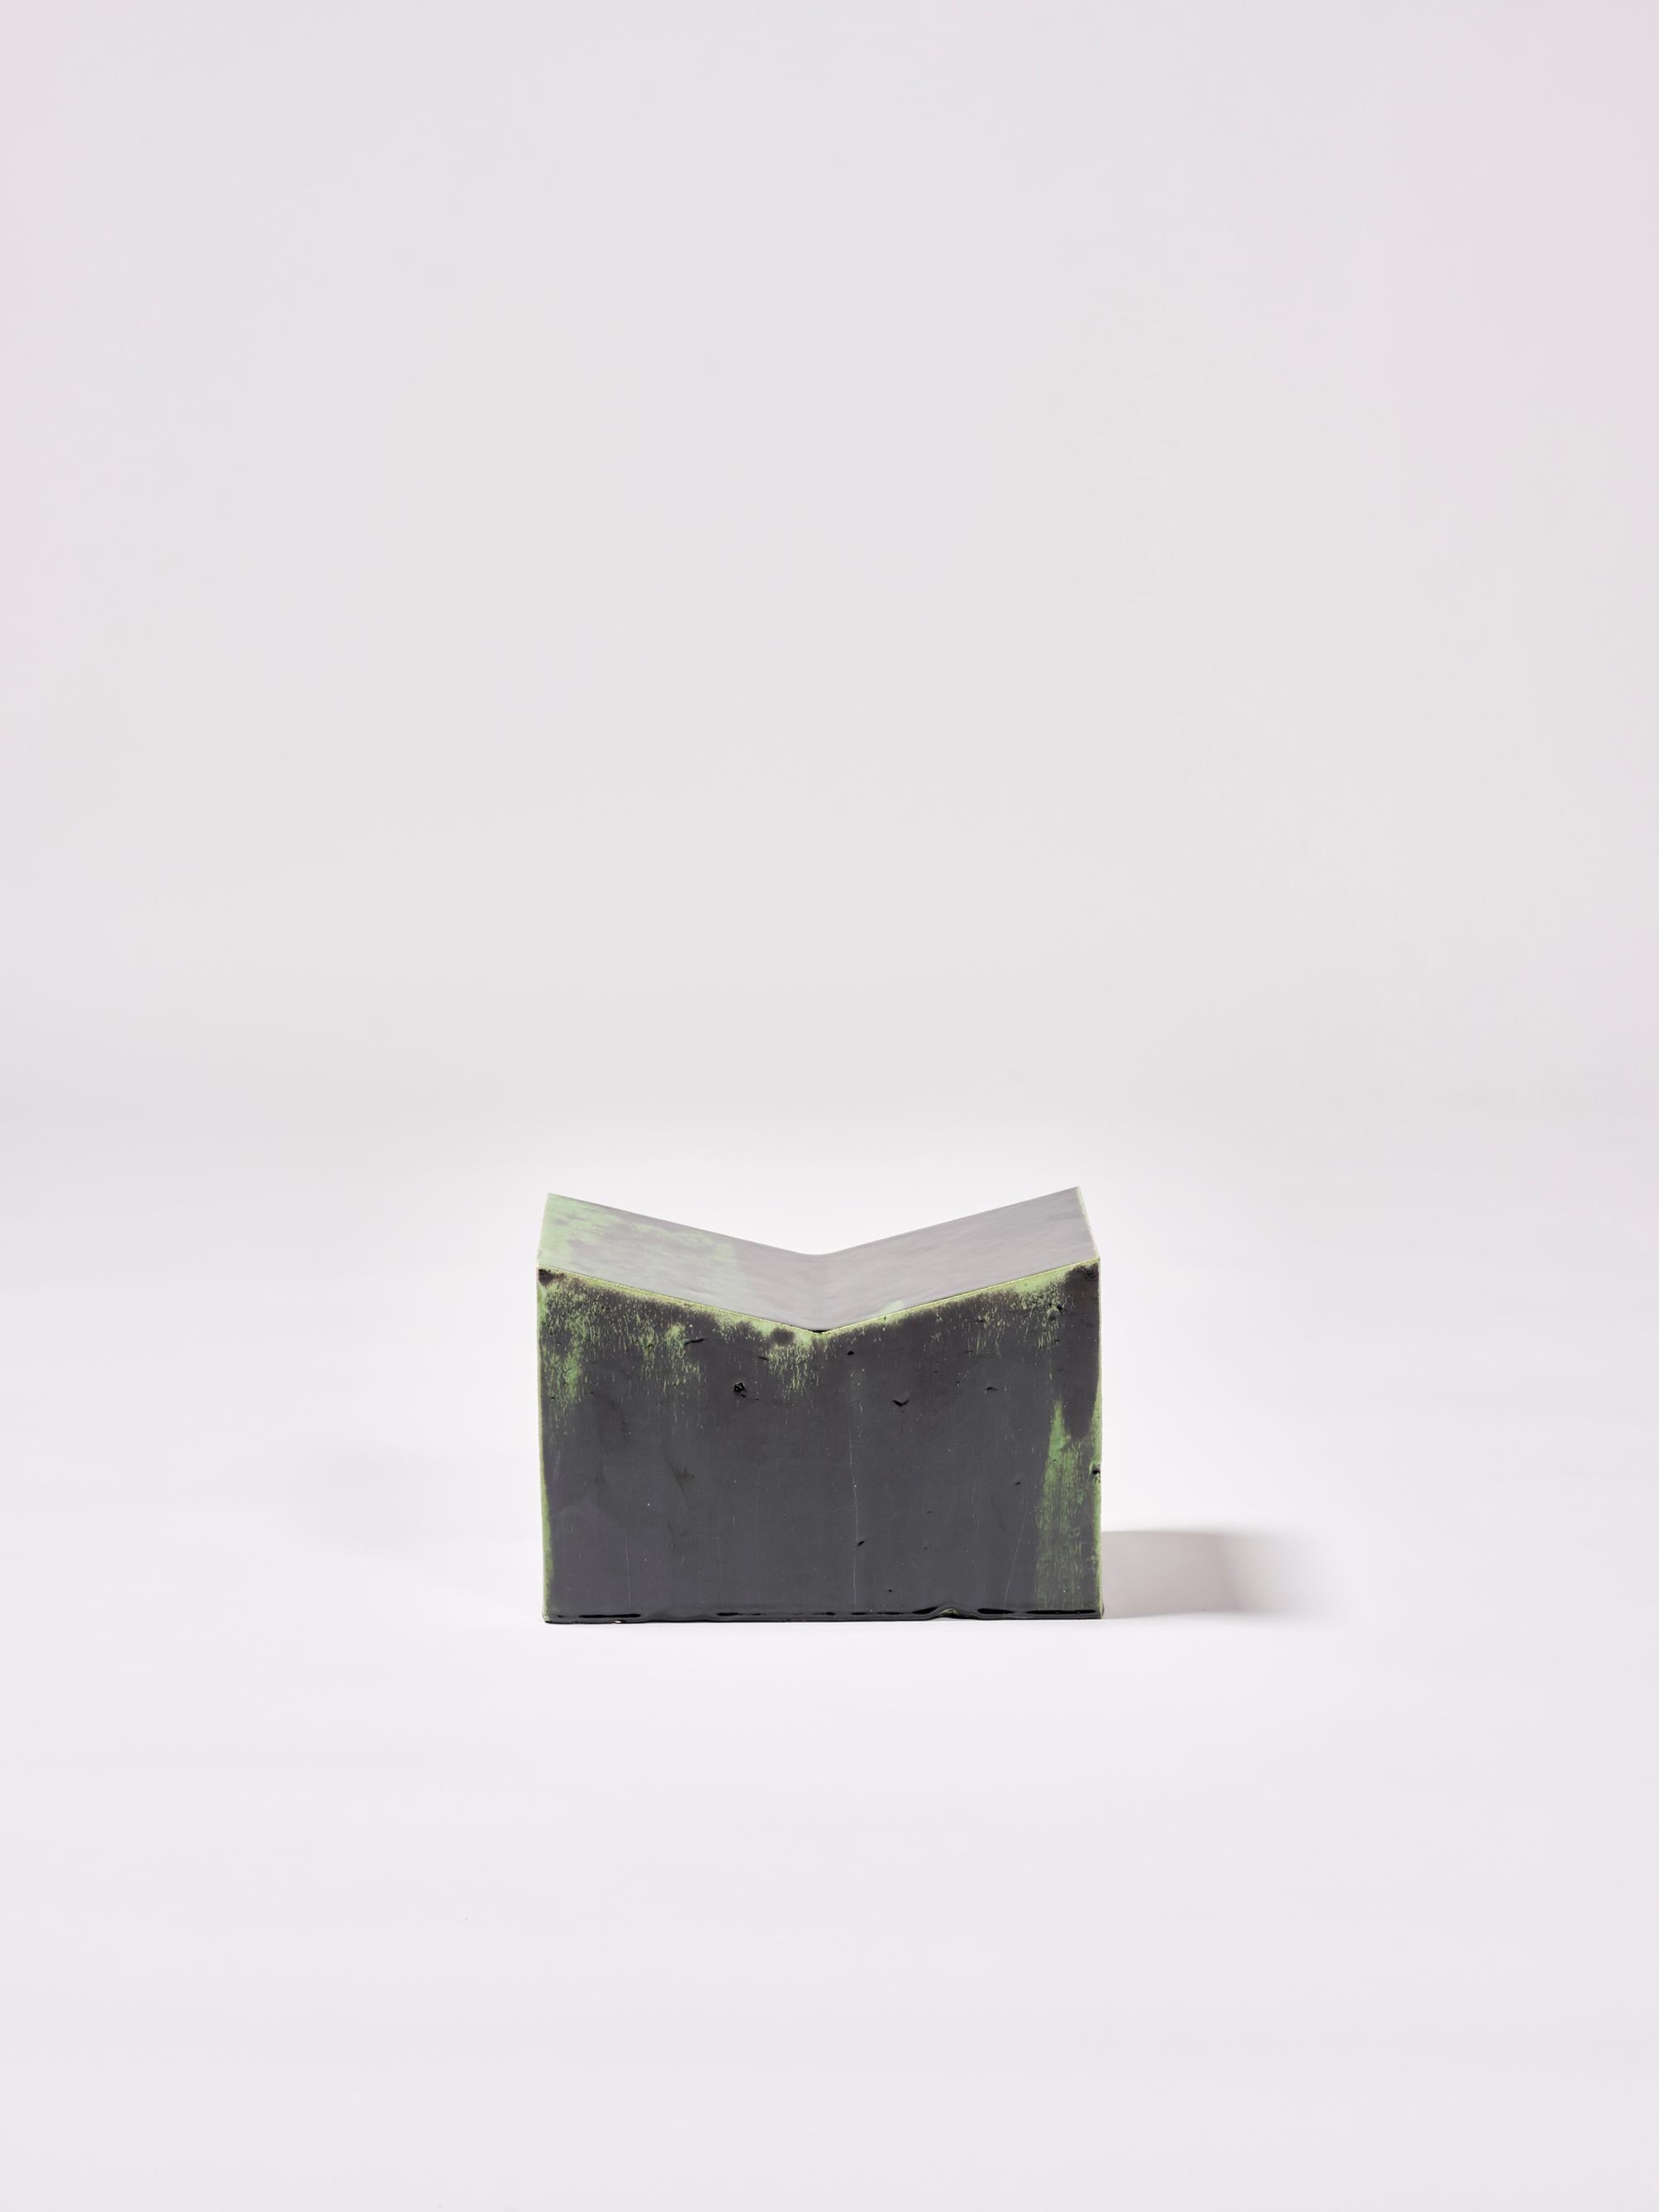 Spanish Contemporary Ceramic Table Lectern Reading Desk Glazed Earthenware Green Black